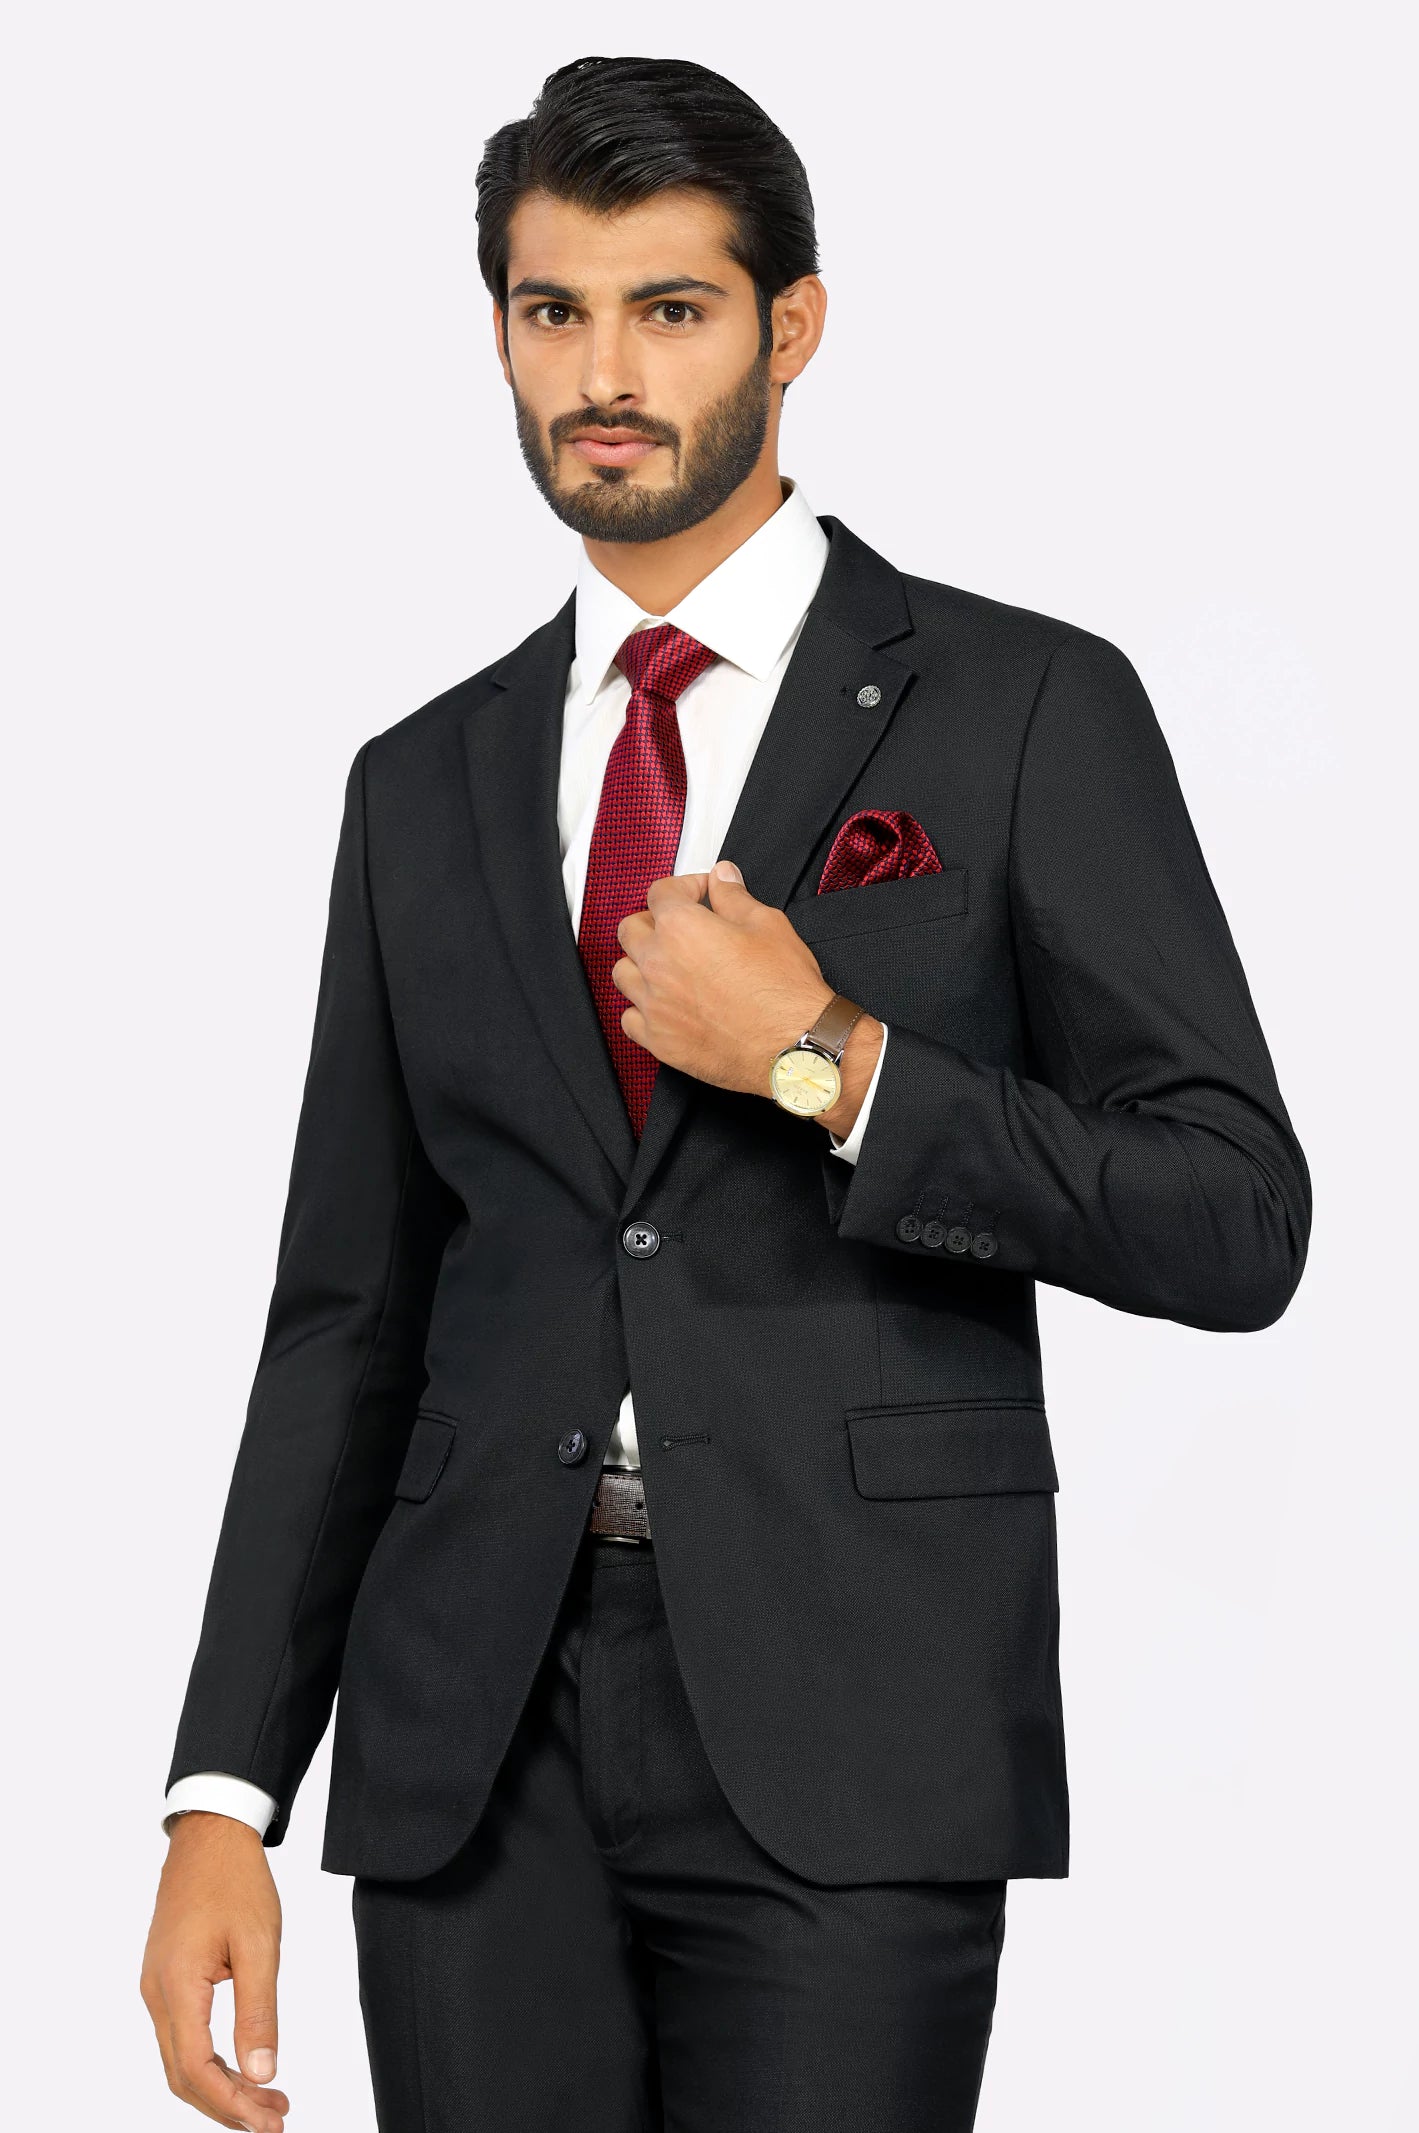 2PC Black Formal Suit for Men's